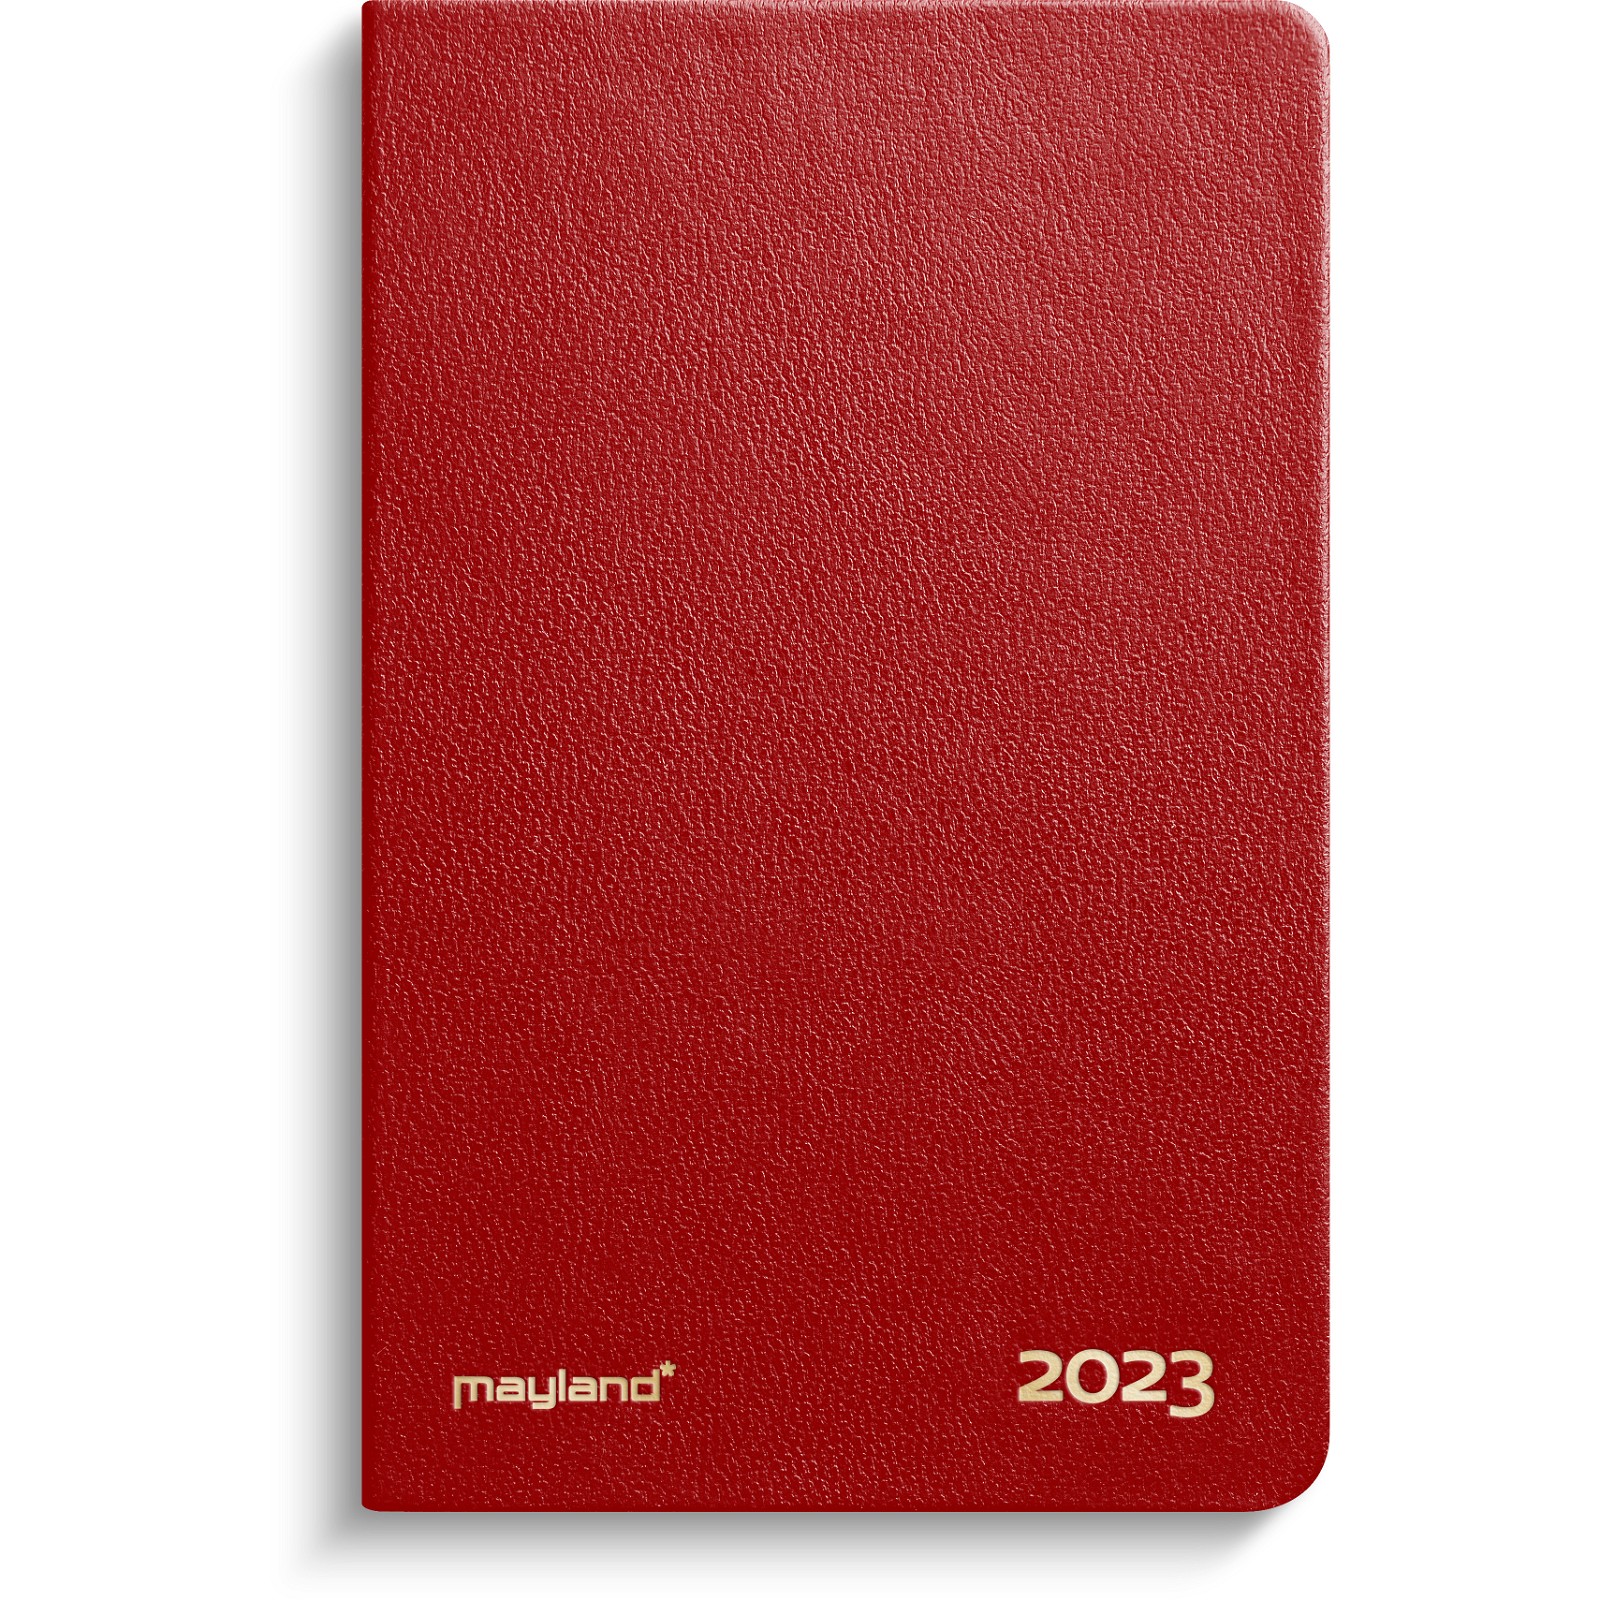 Mayland 2023 23162030 lommekalender 12x7,5x1,5cm rød